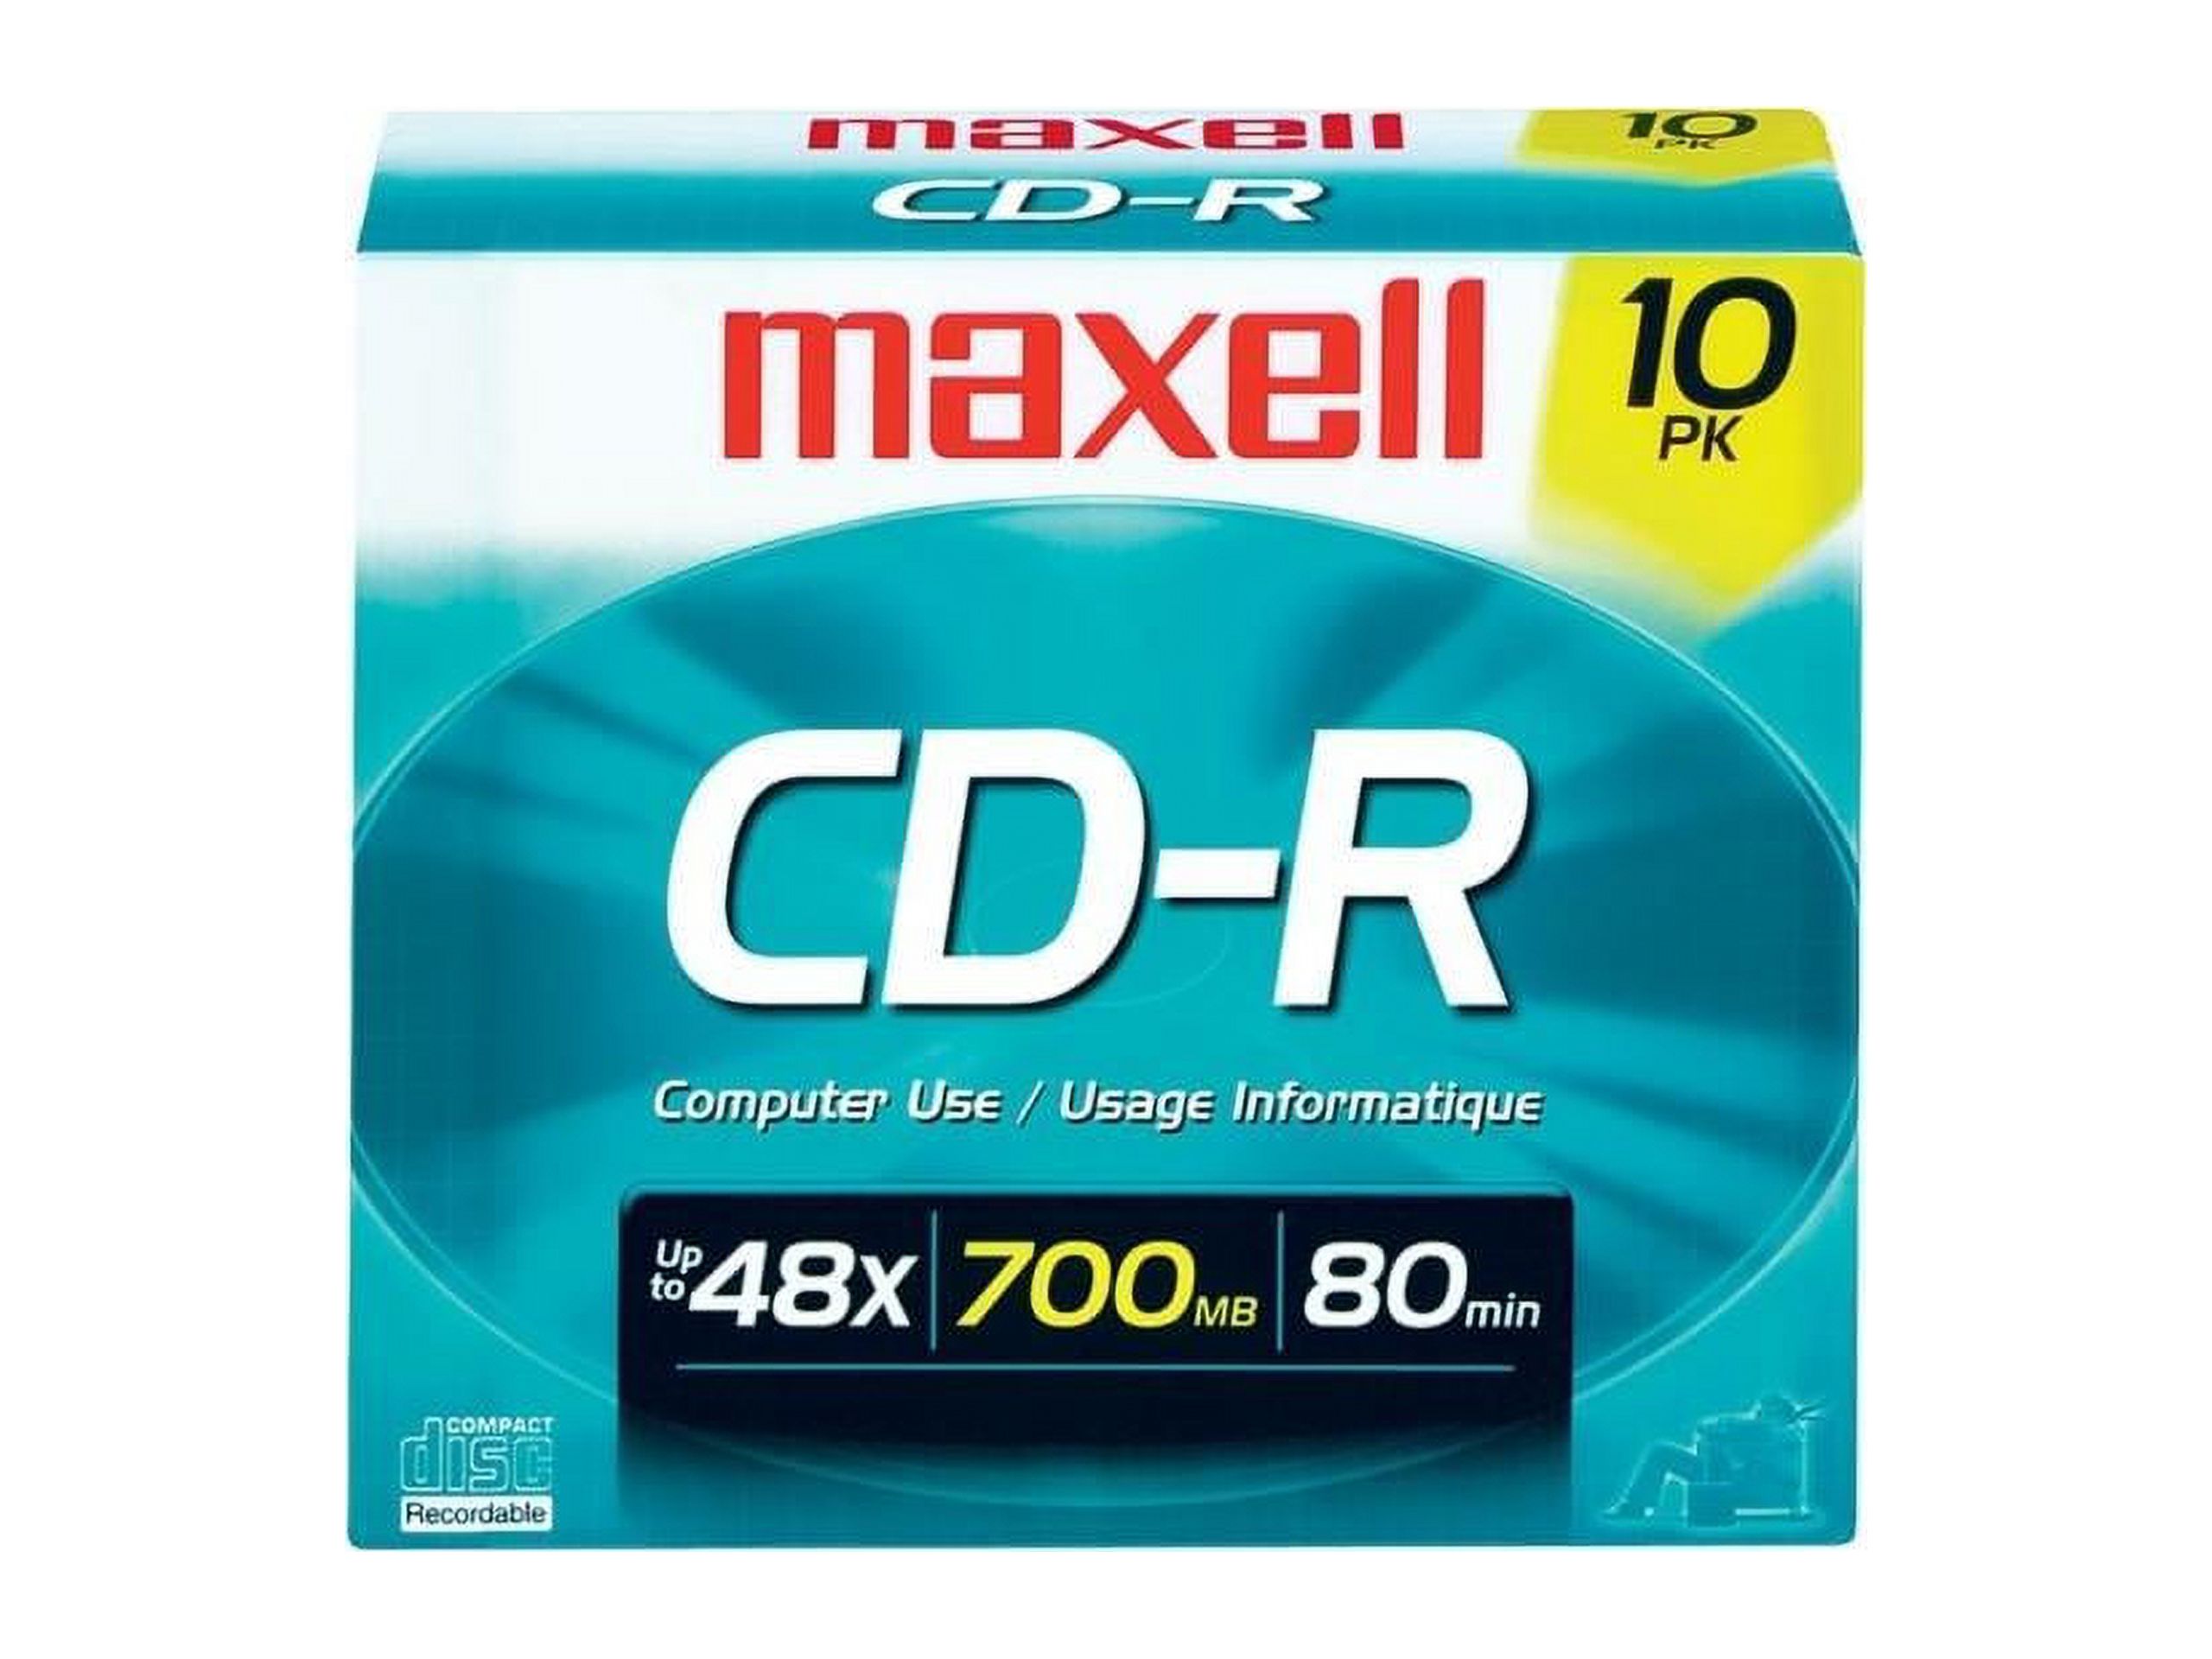 maxell 700MB 48X CD-R 10 Packs Slim Jewel Case Media Model 648210 - image 1 of 2